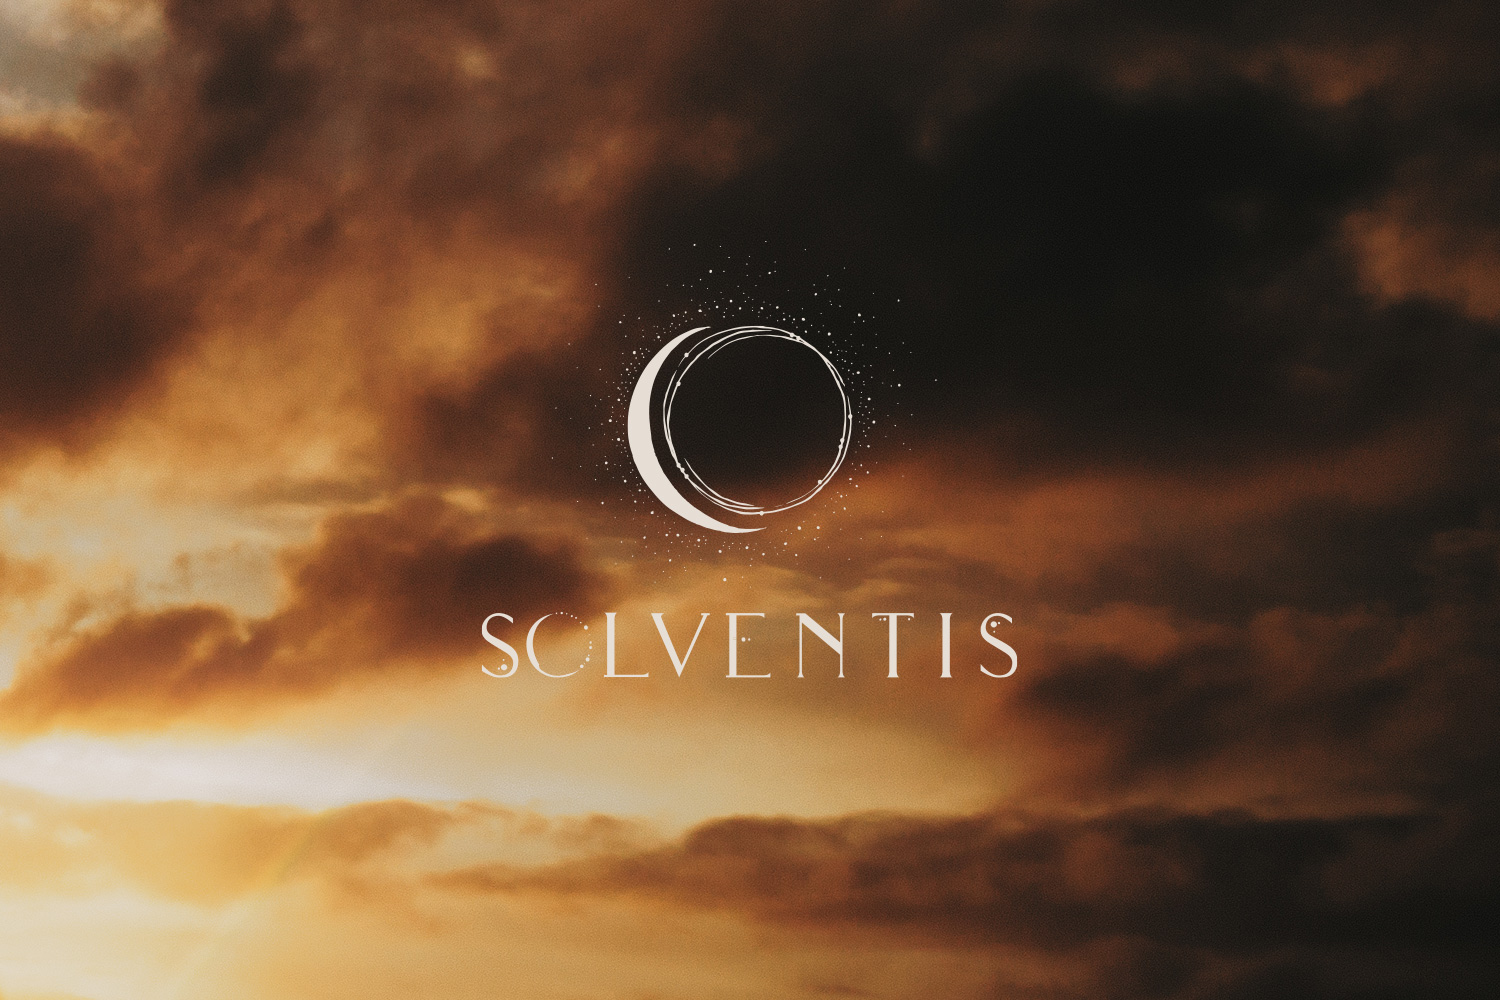 Solventis, French folk music band rebranding